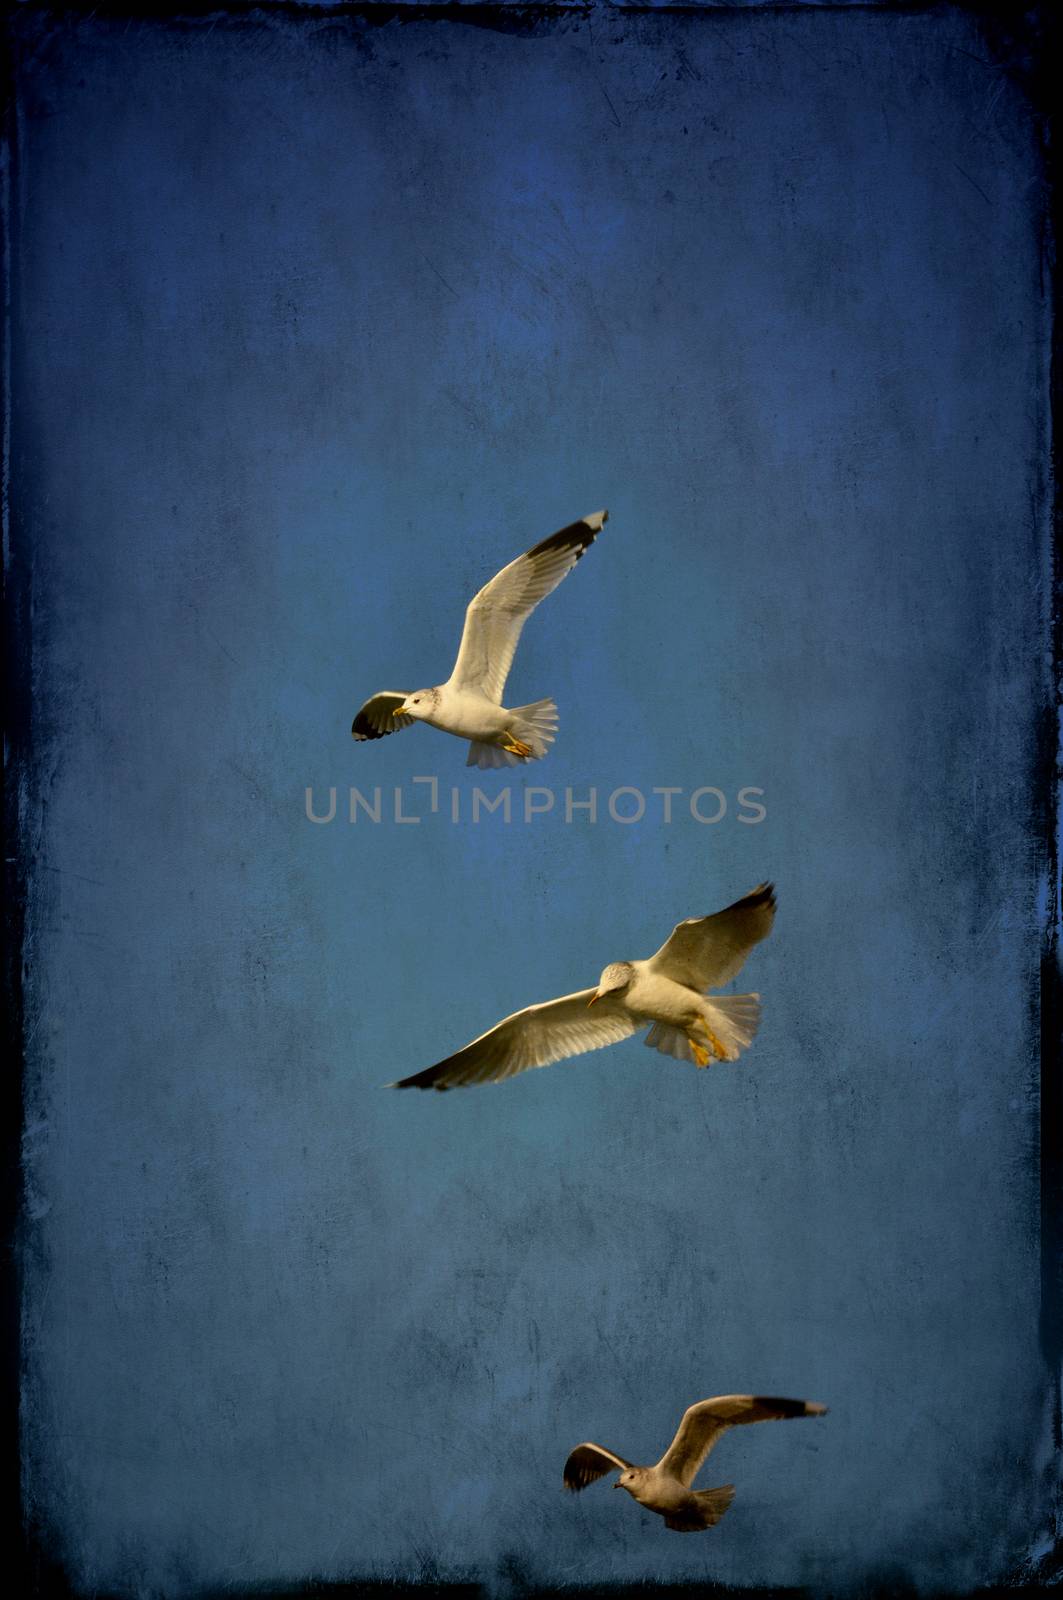 Textured image of three seagulls.